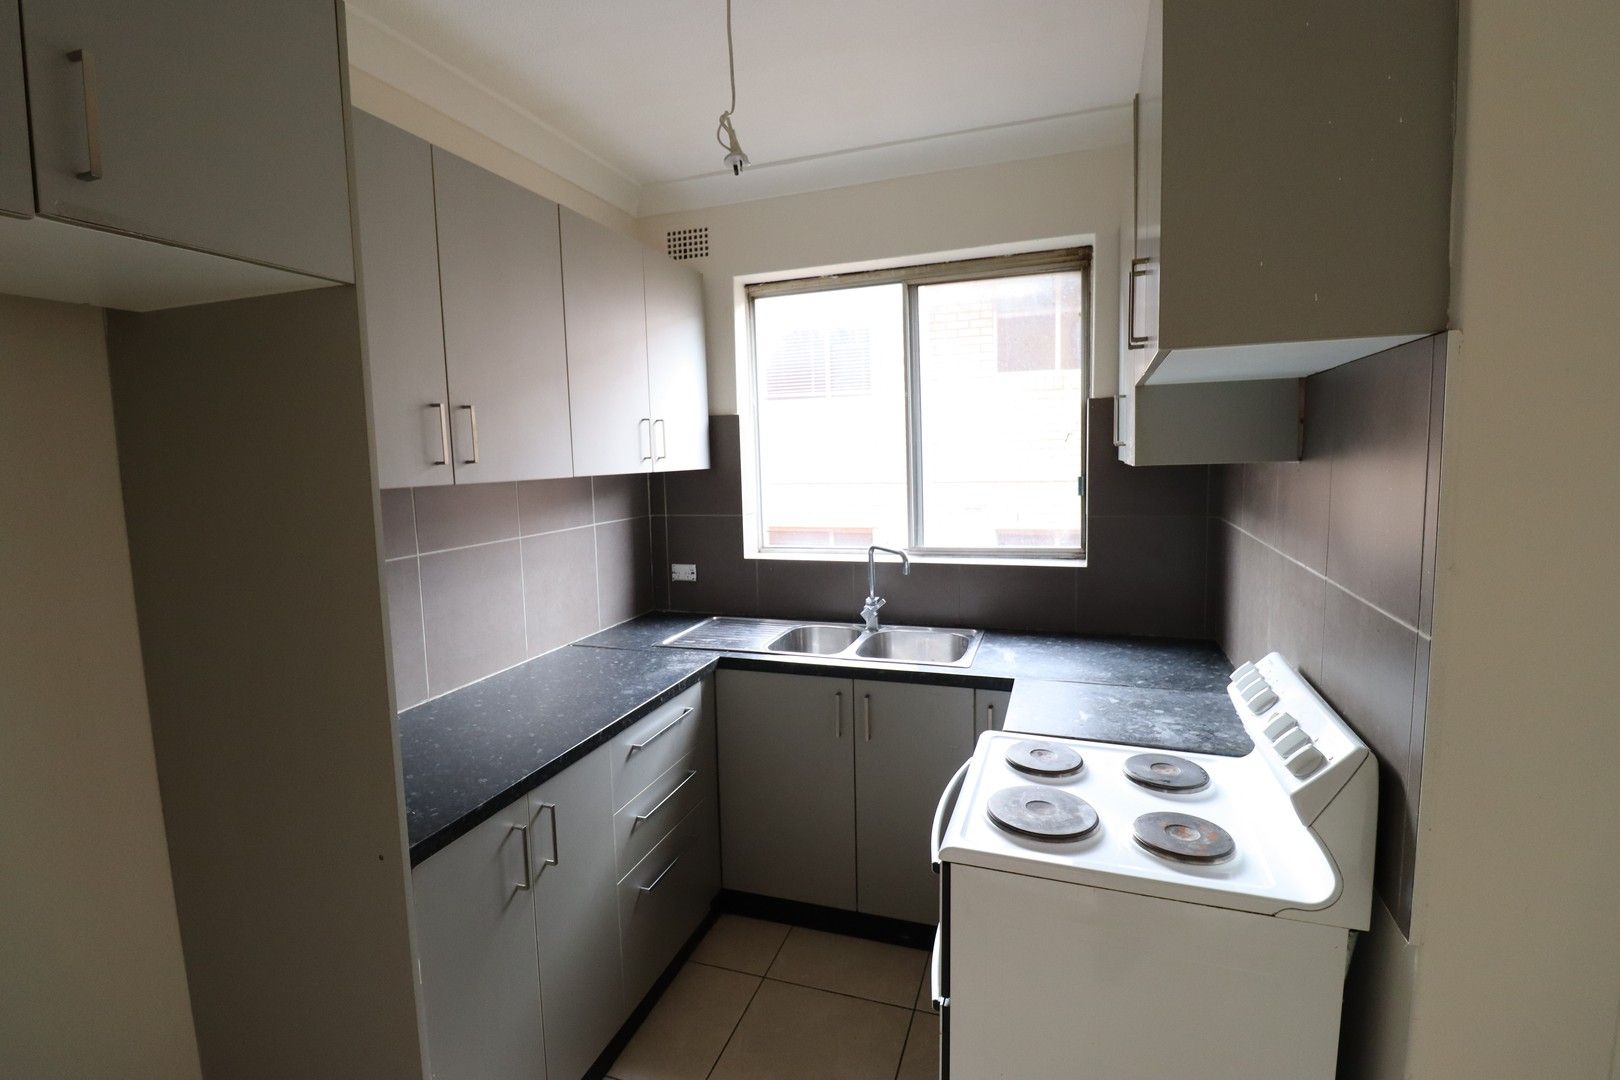 2 bedrooms Apartment / Unit / Flat in 8/57 Fairmount Street LAKEMBA NSW, 2195